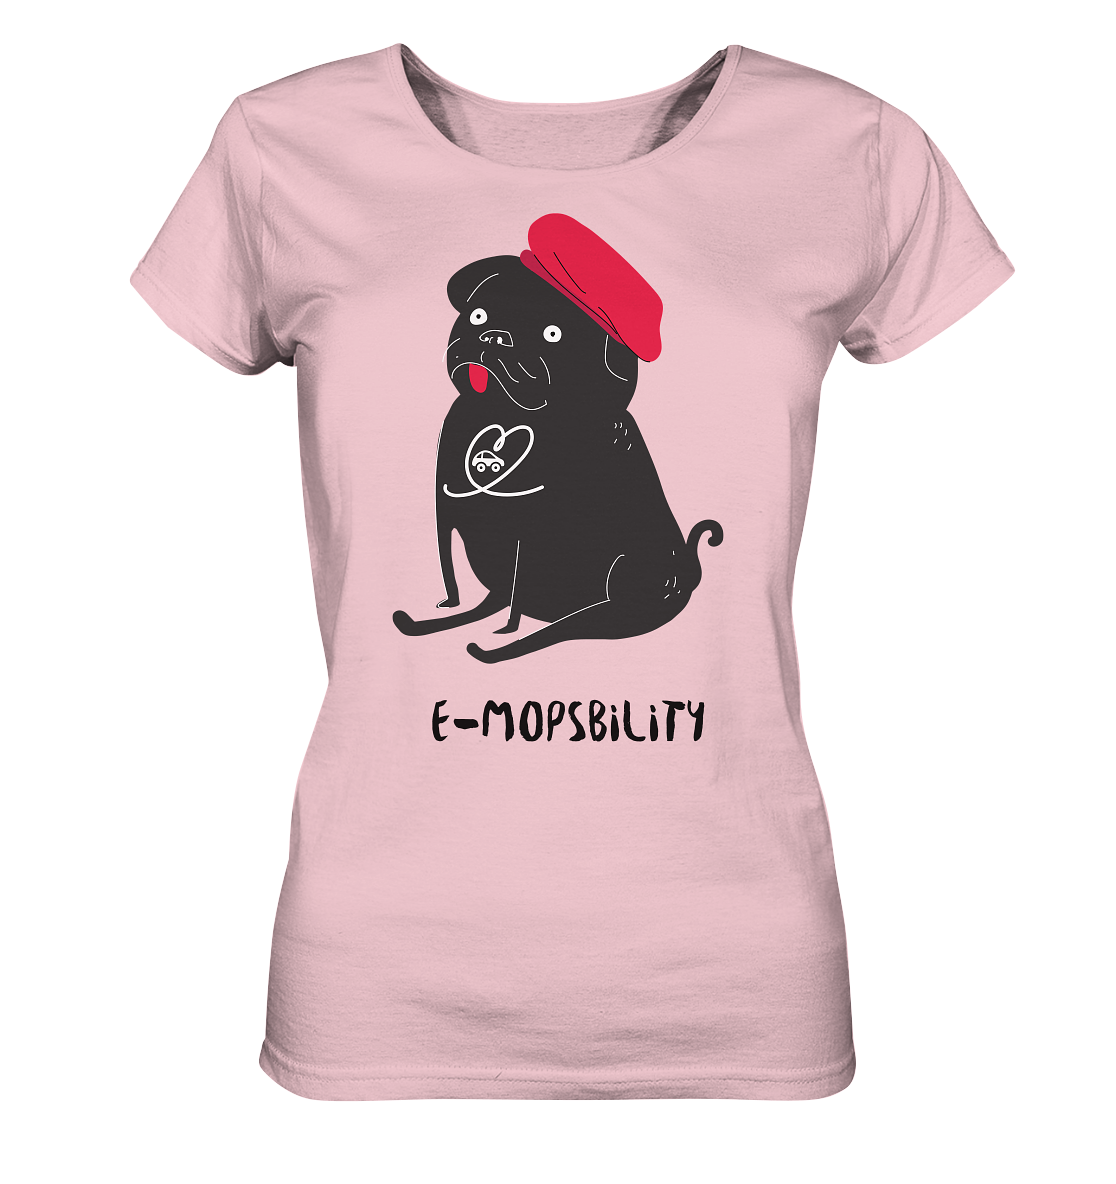 E-Mopsbility ORGANIC - Ladies Organic Shirt